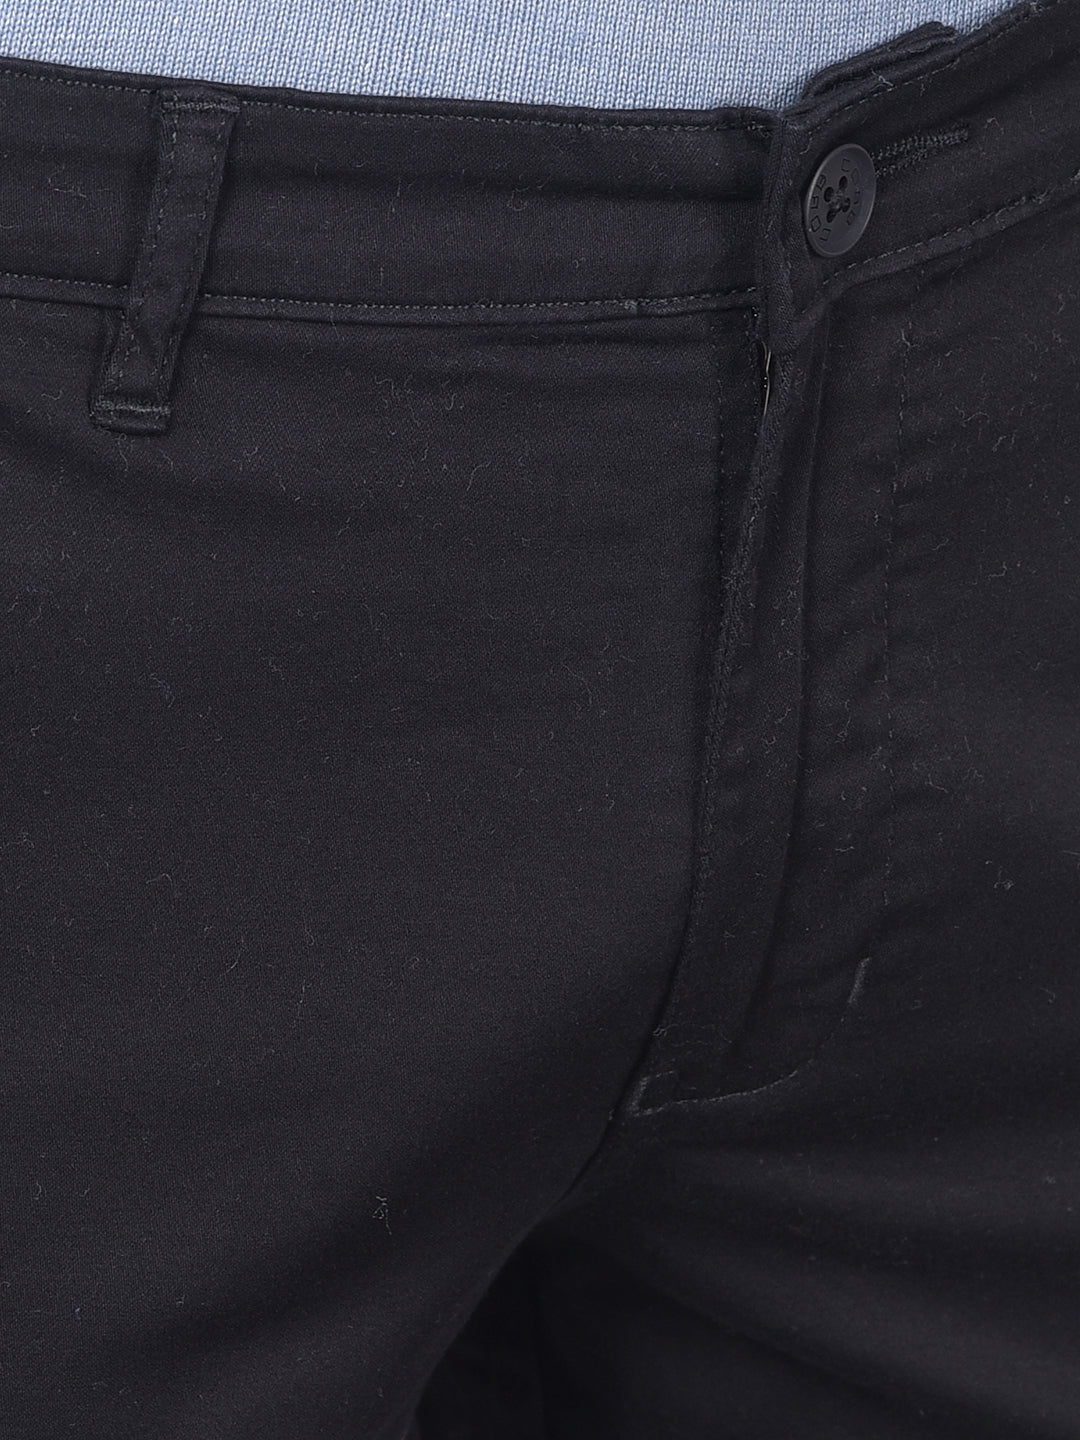 Reserve Boston Chino Pant In Black | MYER